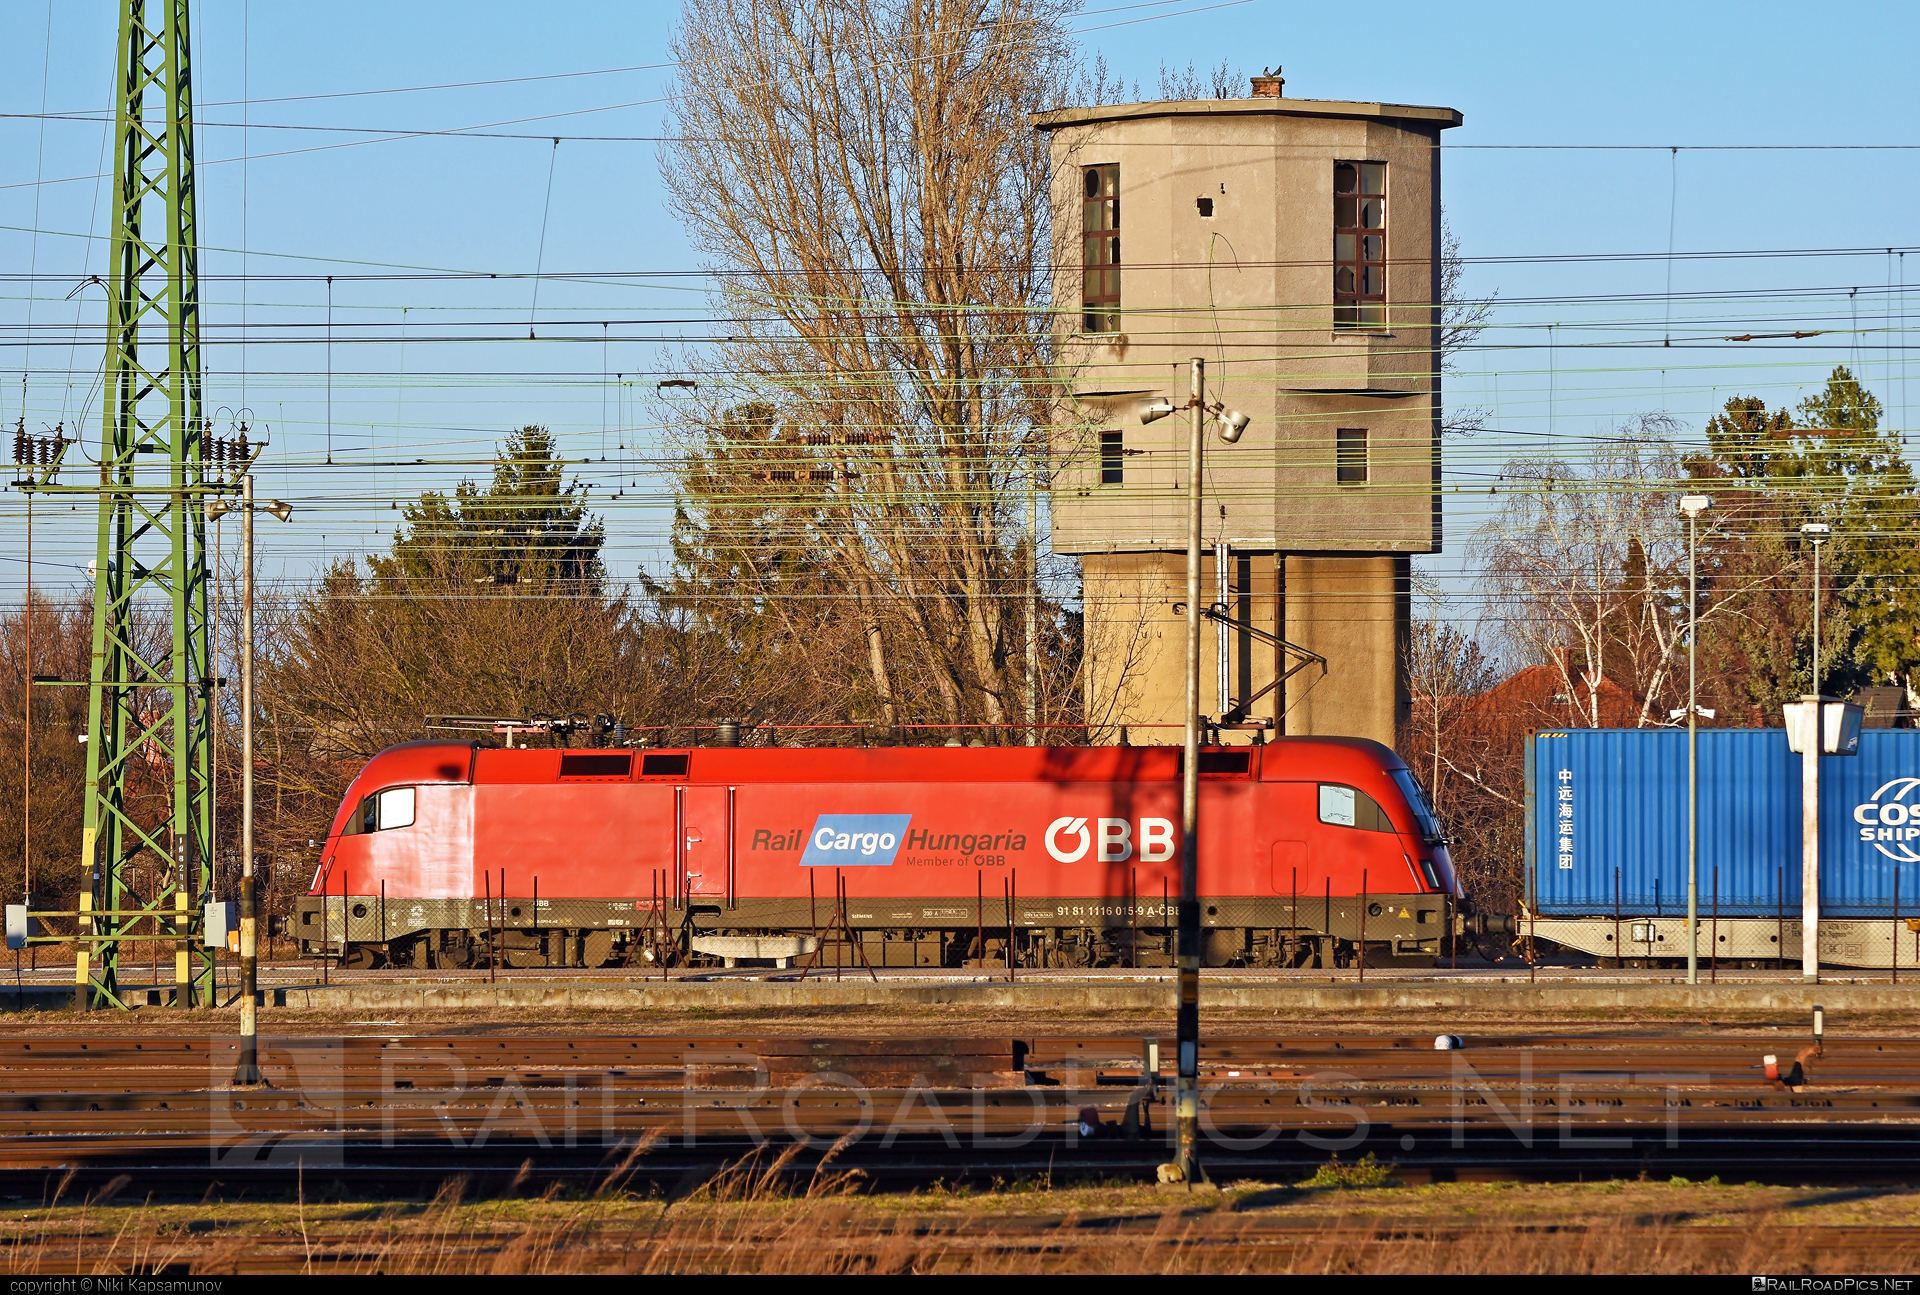 Siemens ES 64 U2 - 1116 015 operated by Rail Cargo Hungaria ZRt. #es64 #es64u2 #eurosprinter #obb #osterreichischebundesbahnen #rch #siemens #siemensEs64 #siemensEs64u2 #siemenstaurus #taurus #tauruslocomotive